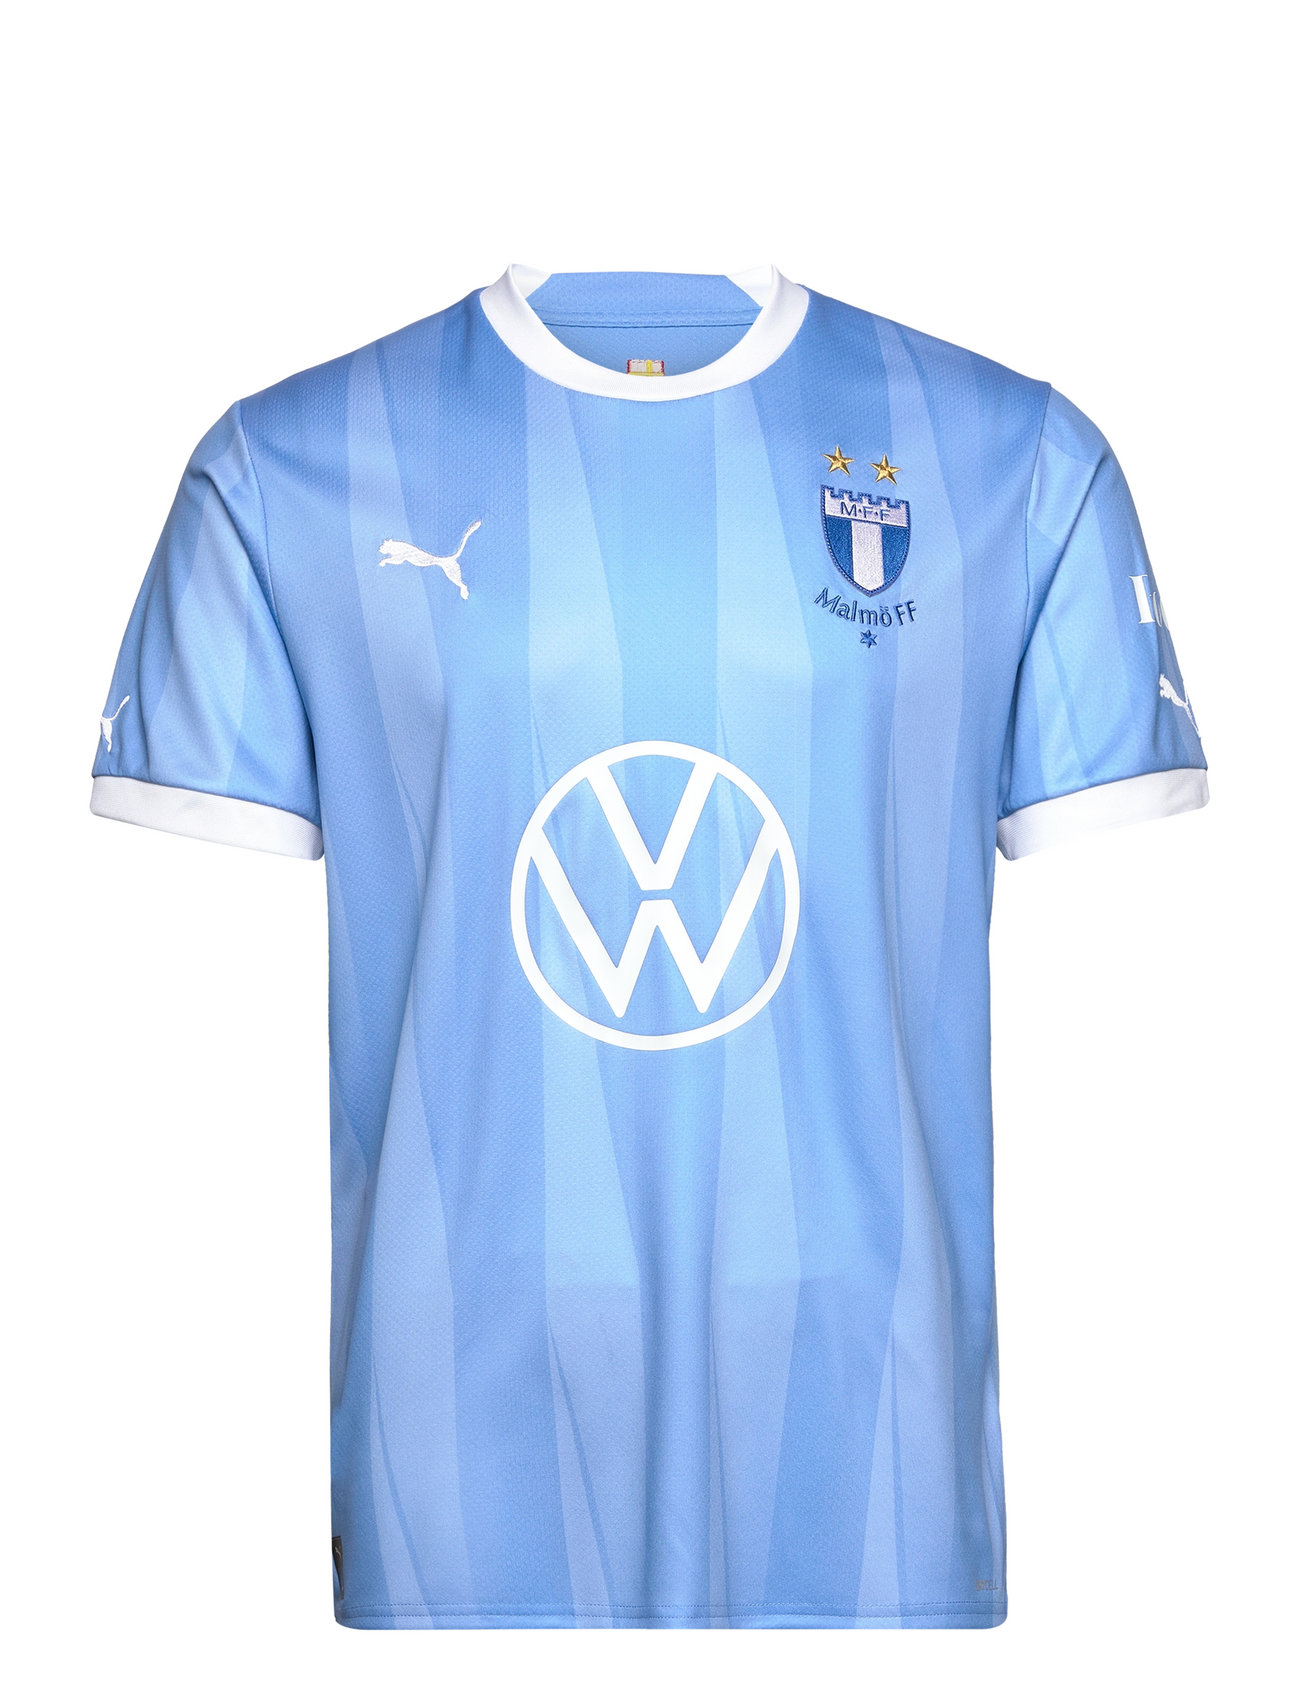 Malmo Home Jersey Replica Sport T-shirts Football Shirts Blue MALMÖ FF